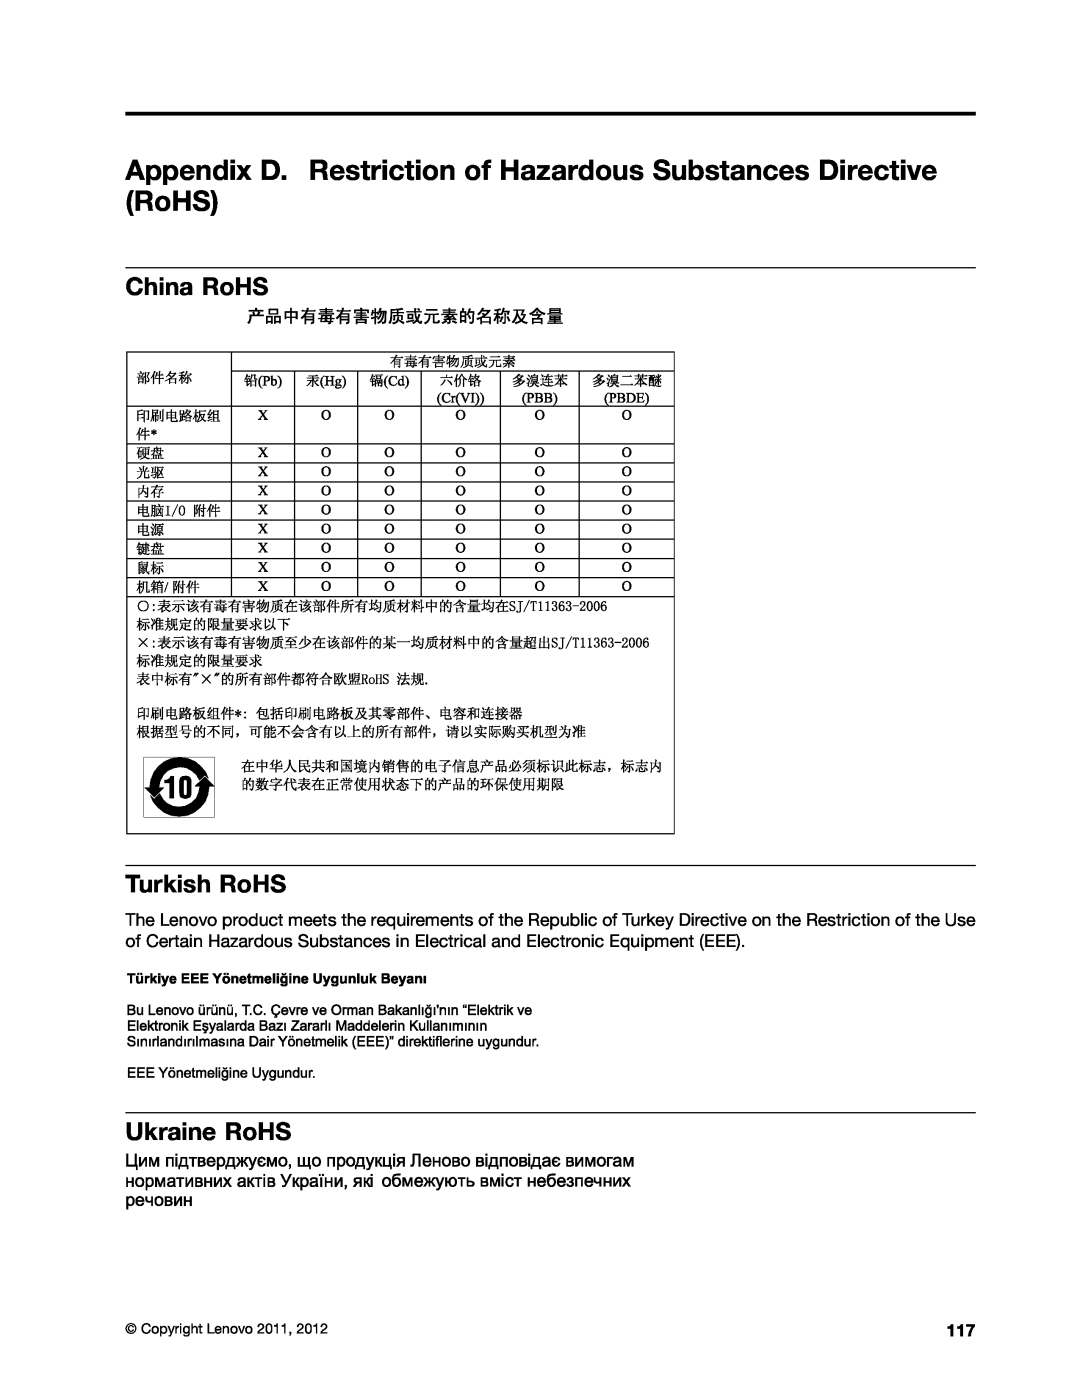 Lenovo 1992, 1993 Appendix D. Restriction of Hazardous Substances Directive RoHS, China RoHS Turkish RoHS, Ukraine RoHS 